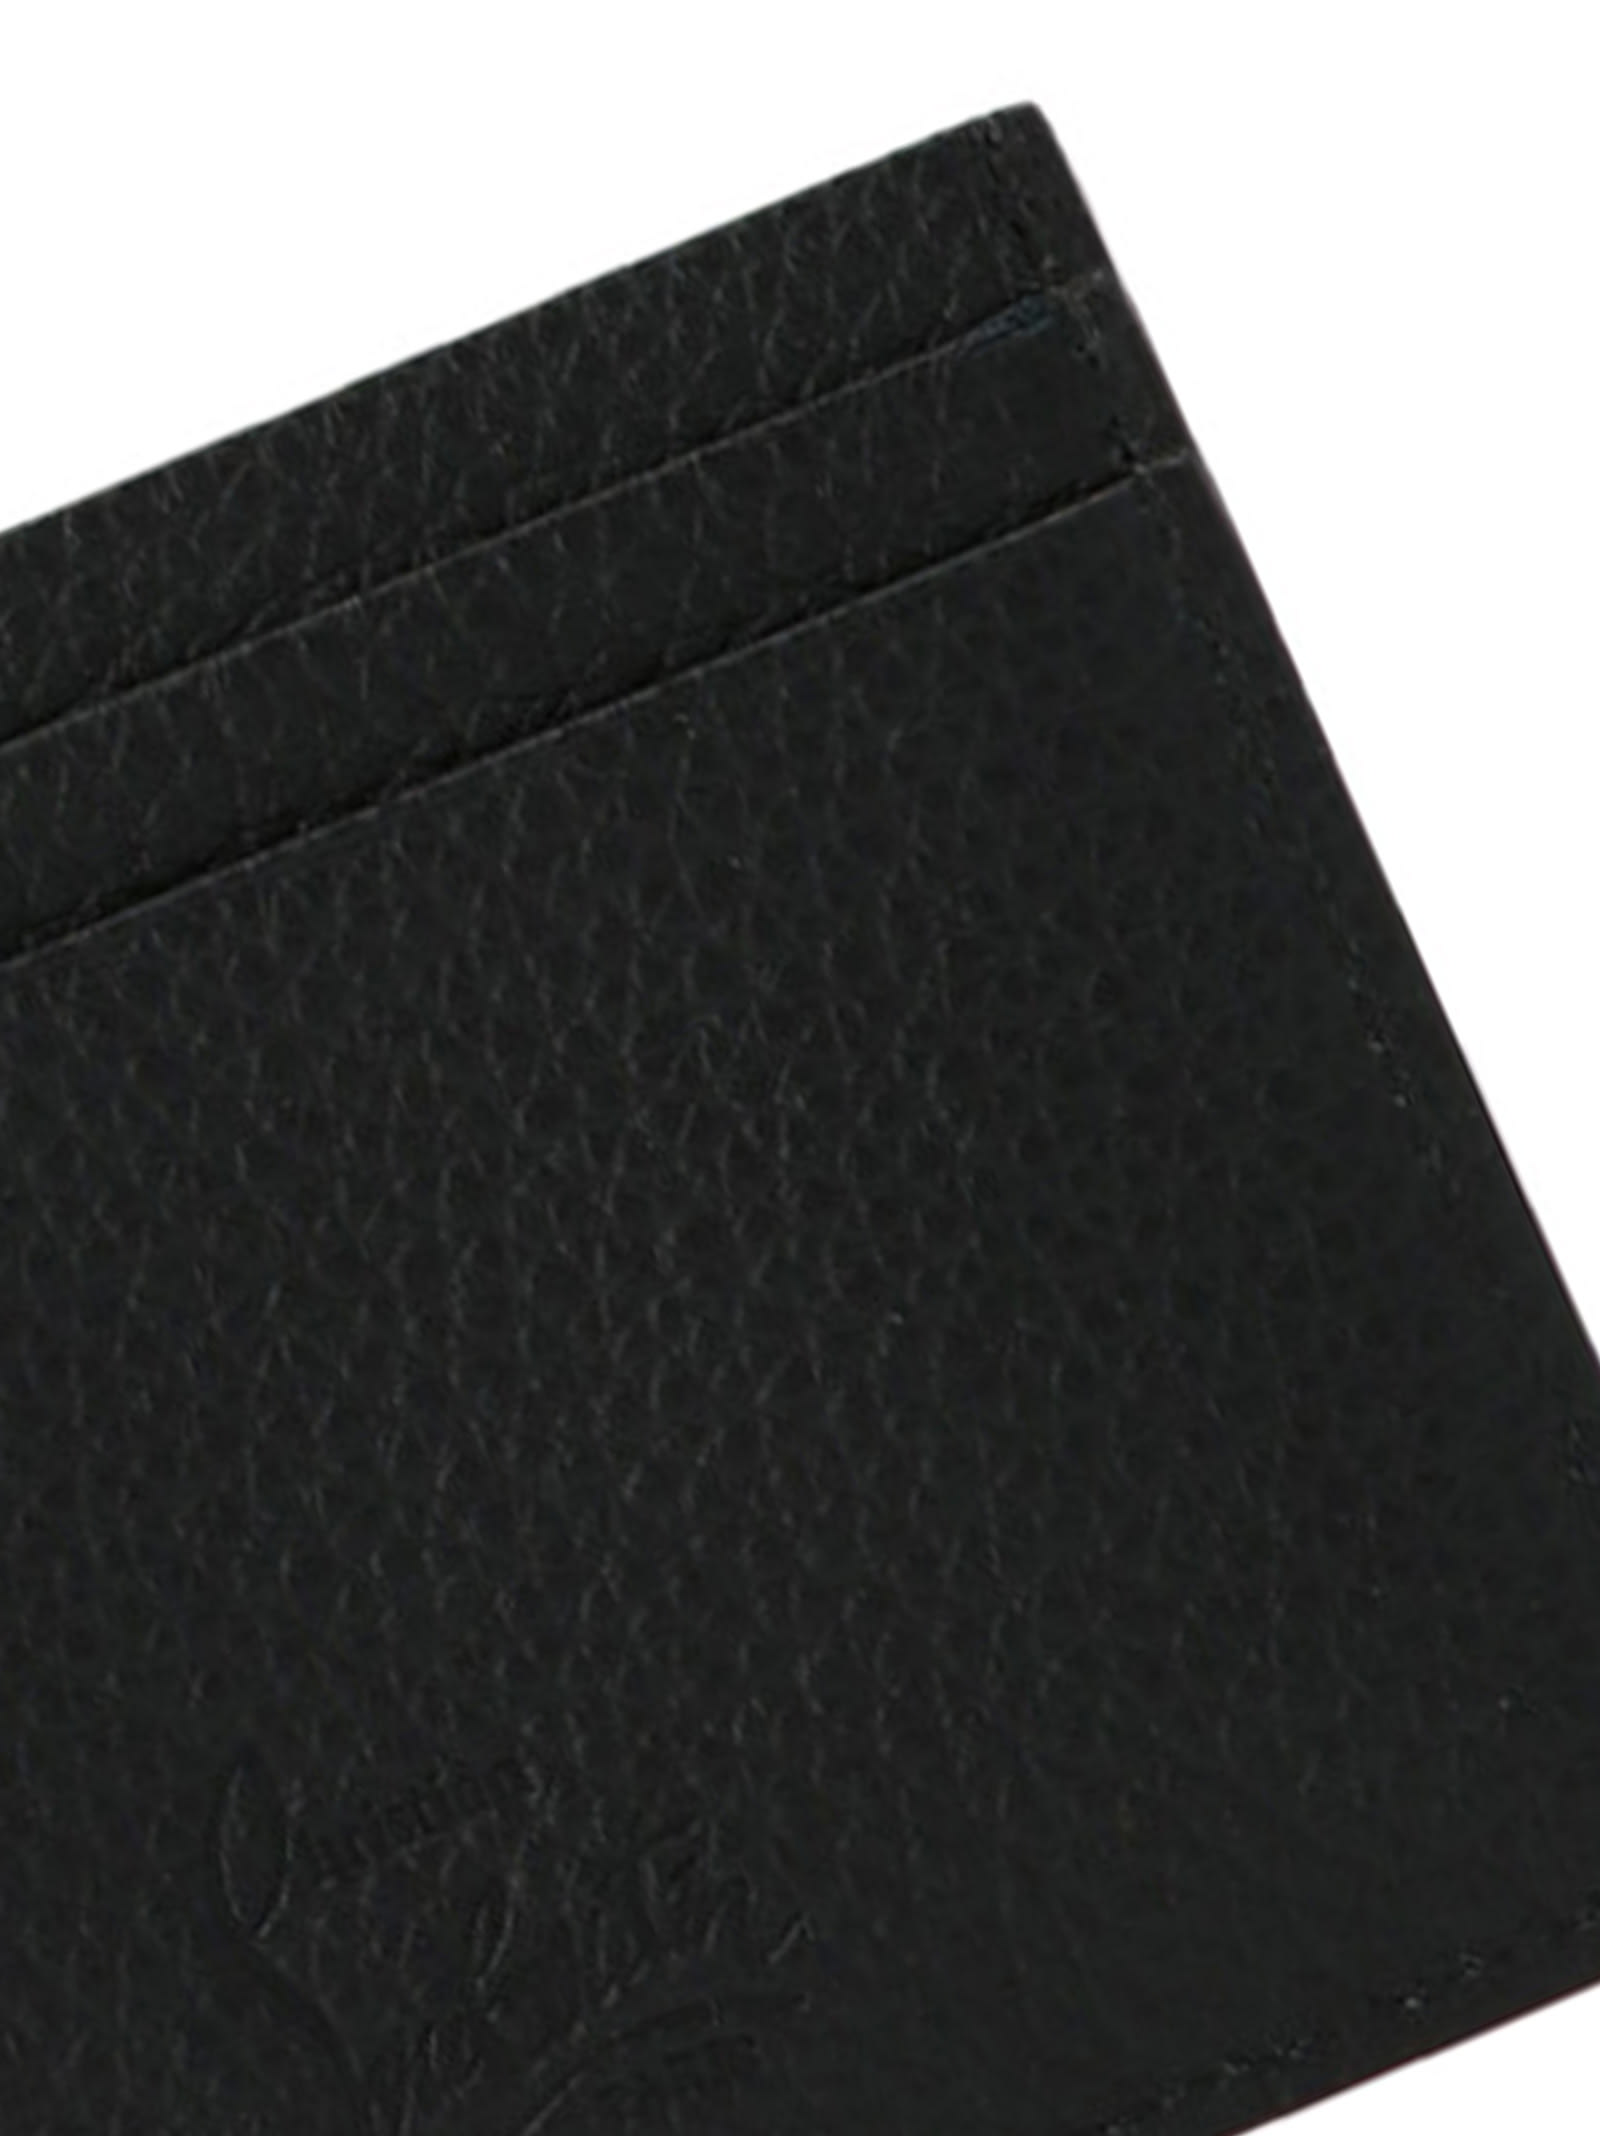 Shop Christian Louboutin Kios Card Holder In Black